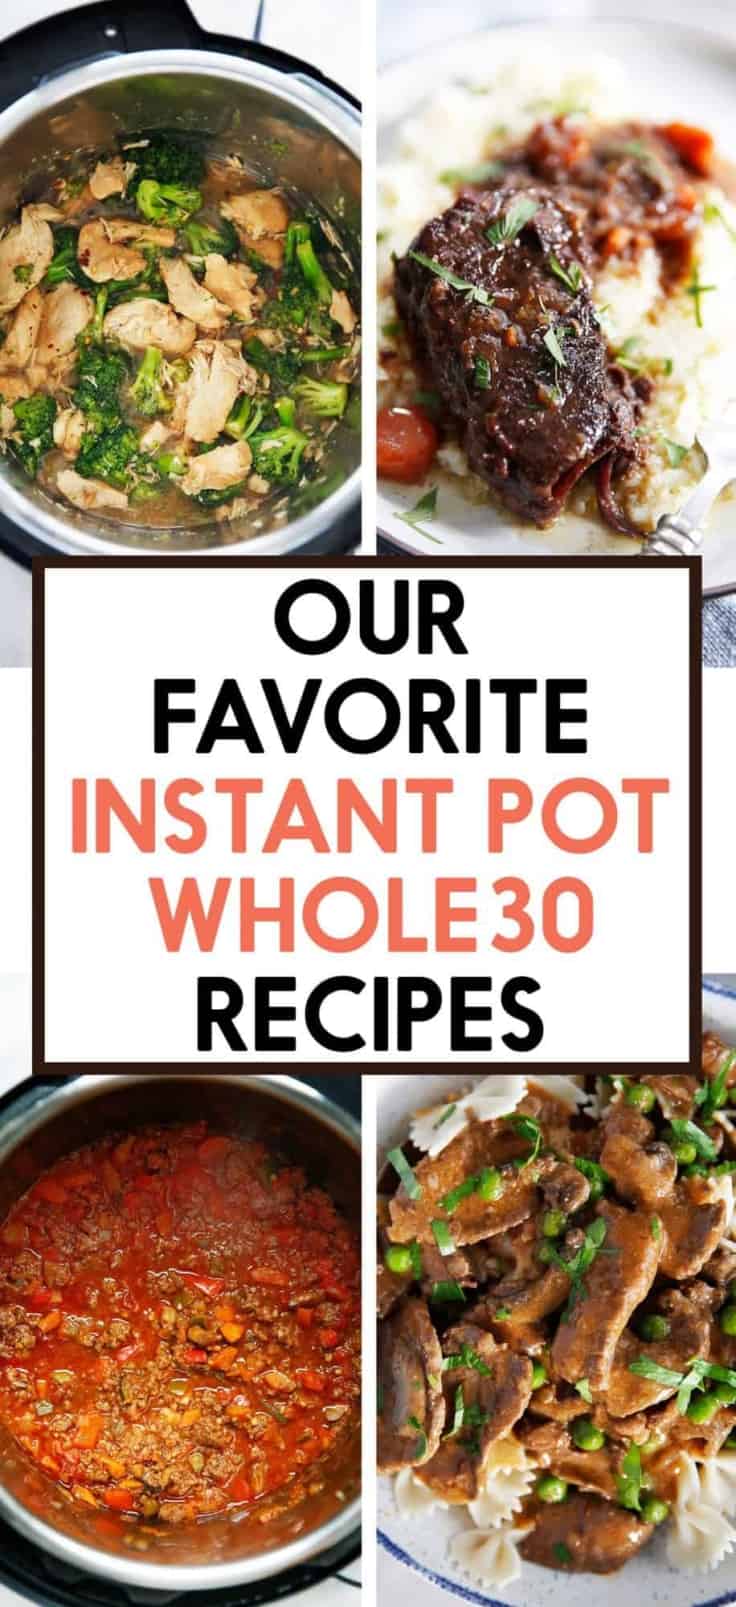 Our Favorite Instant Pot Whole30 Recipes